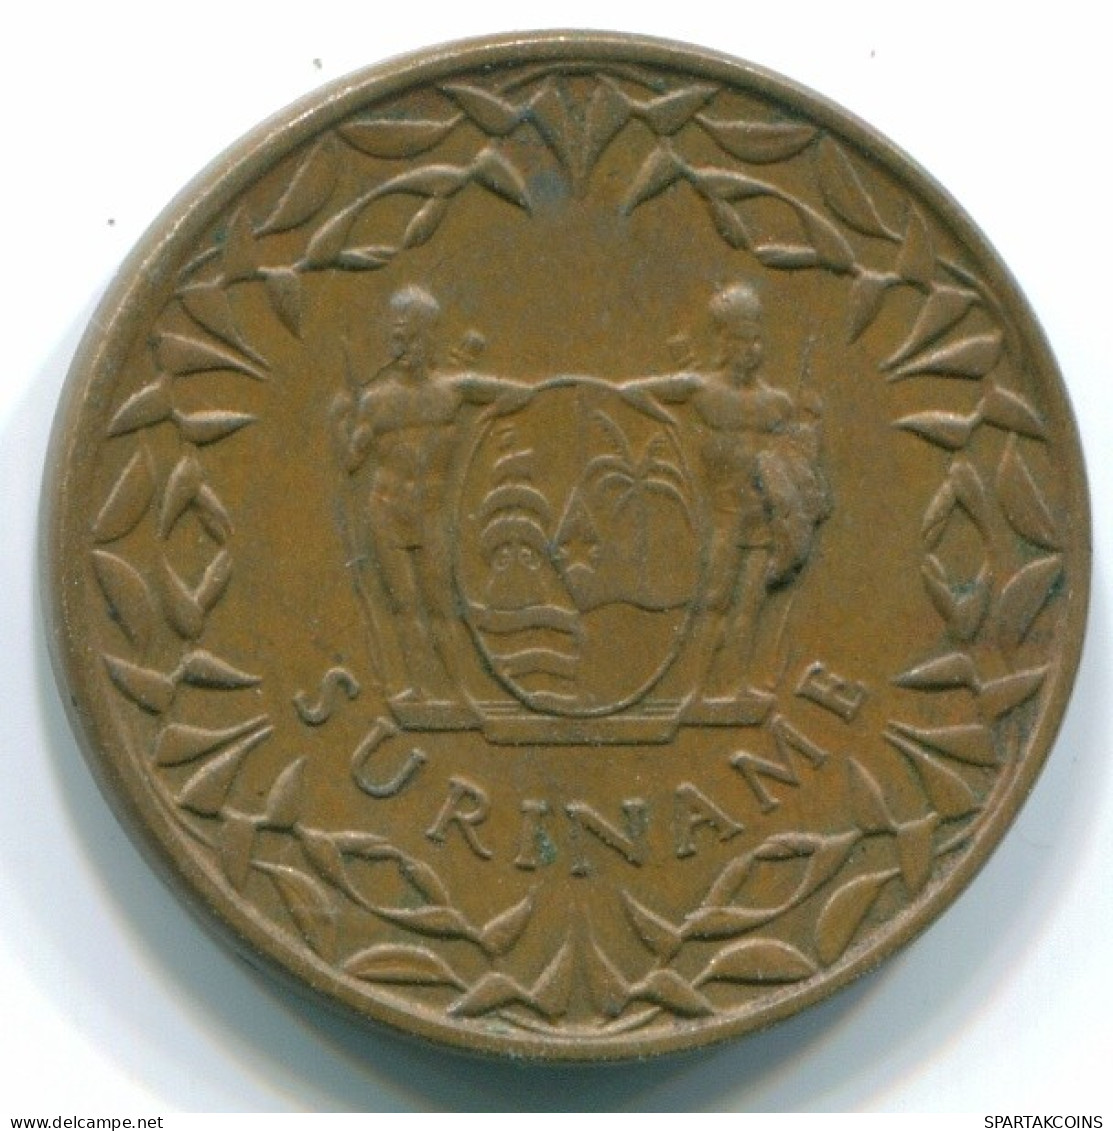 1 CENT 1966 SURINAME Netherlands Bronze Fish Colonial Coin #S10932.U.A - Surinam 1975 - ...